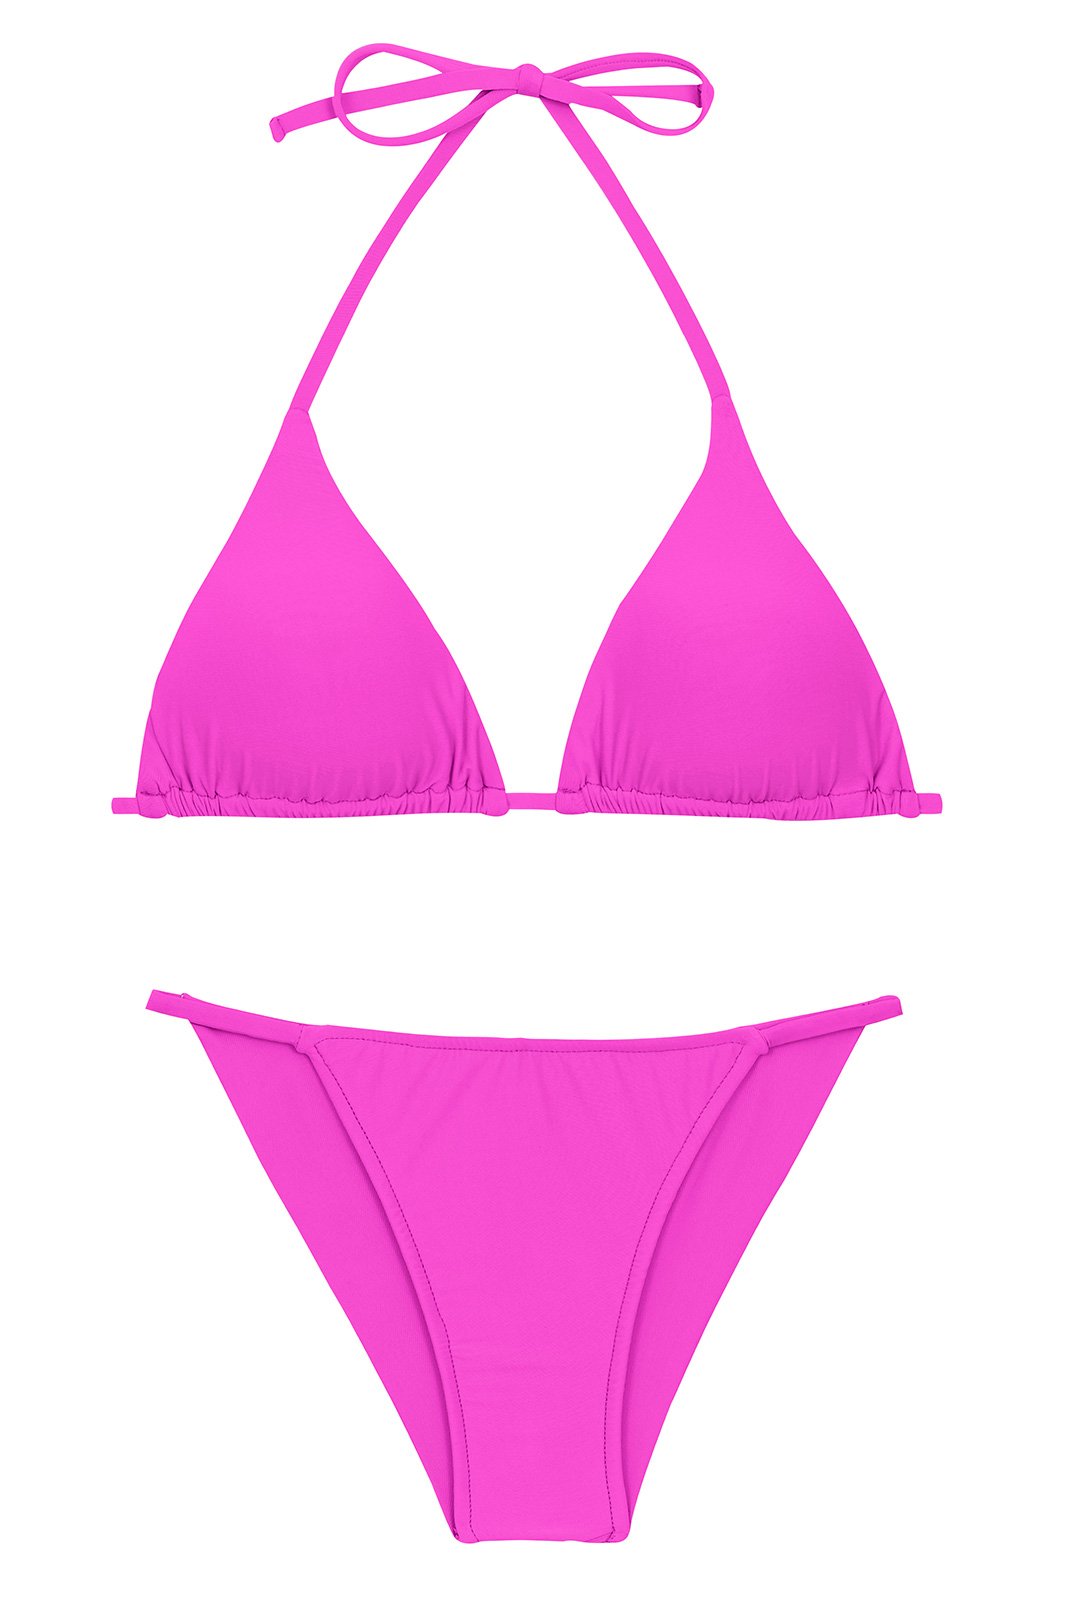 Magenta Pink Cheeky Brazilian Bikini With Slim Sides Set Uv Pink Tri Inv Cheeky Fixa Rio De Sol